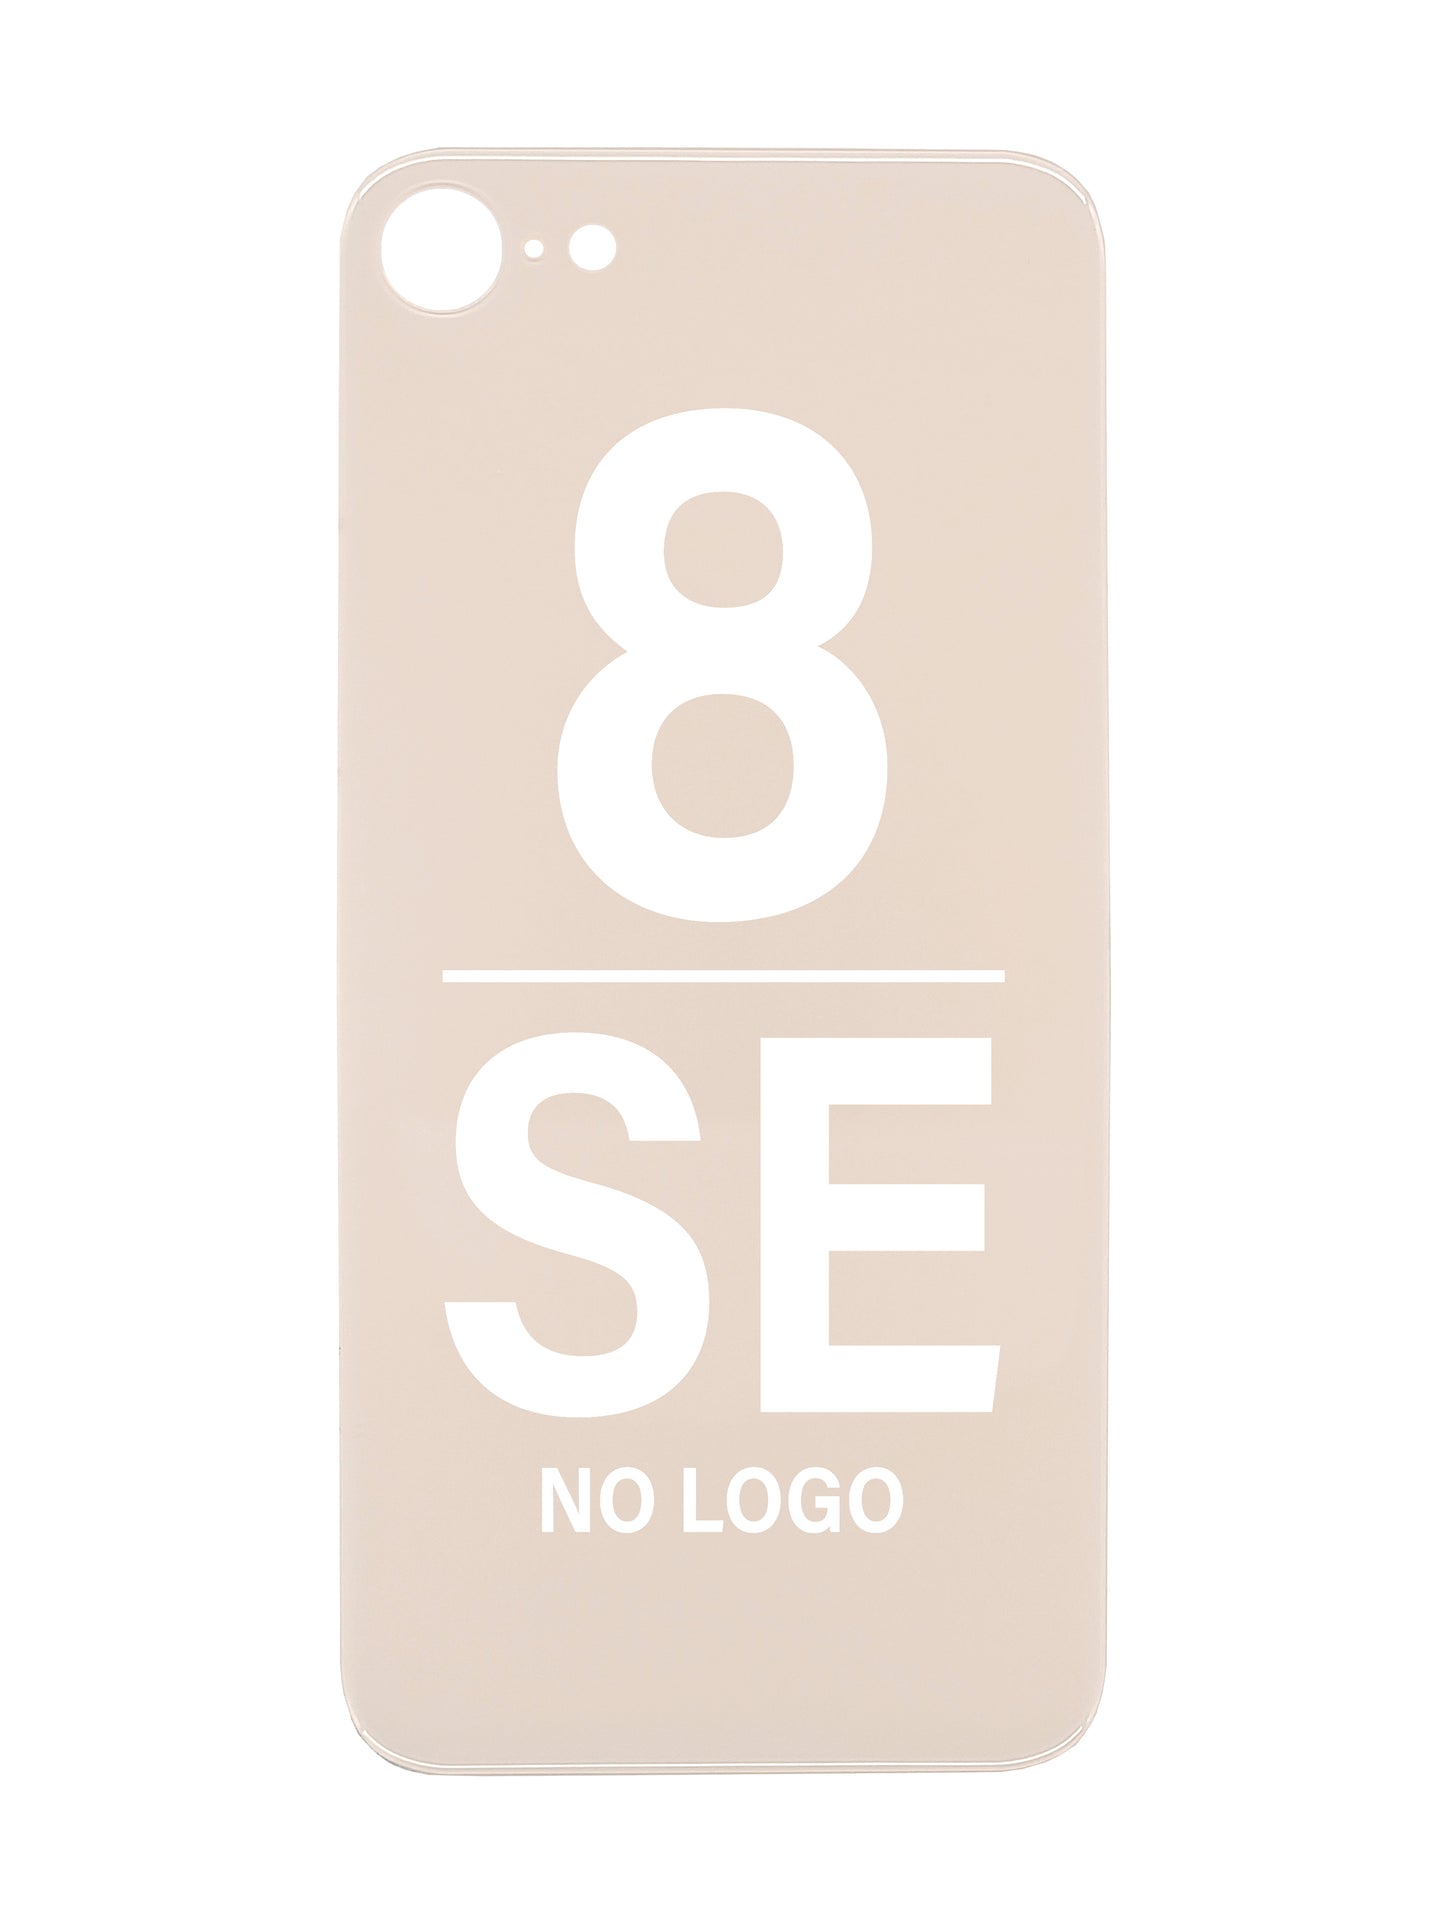 iPhone 8 / SE (2020) Back Glass (No Logo) (Gold)